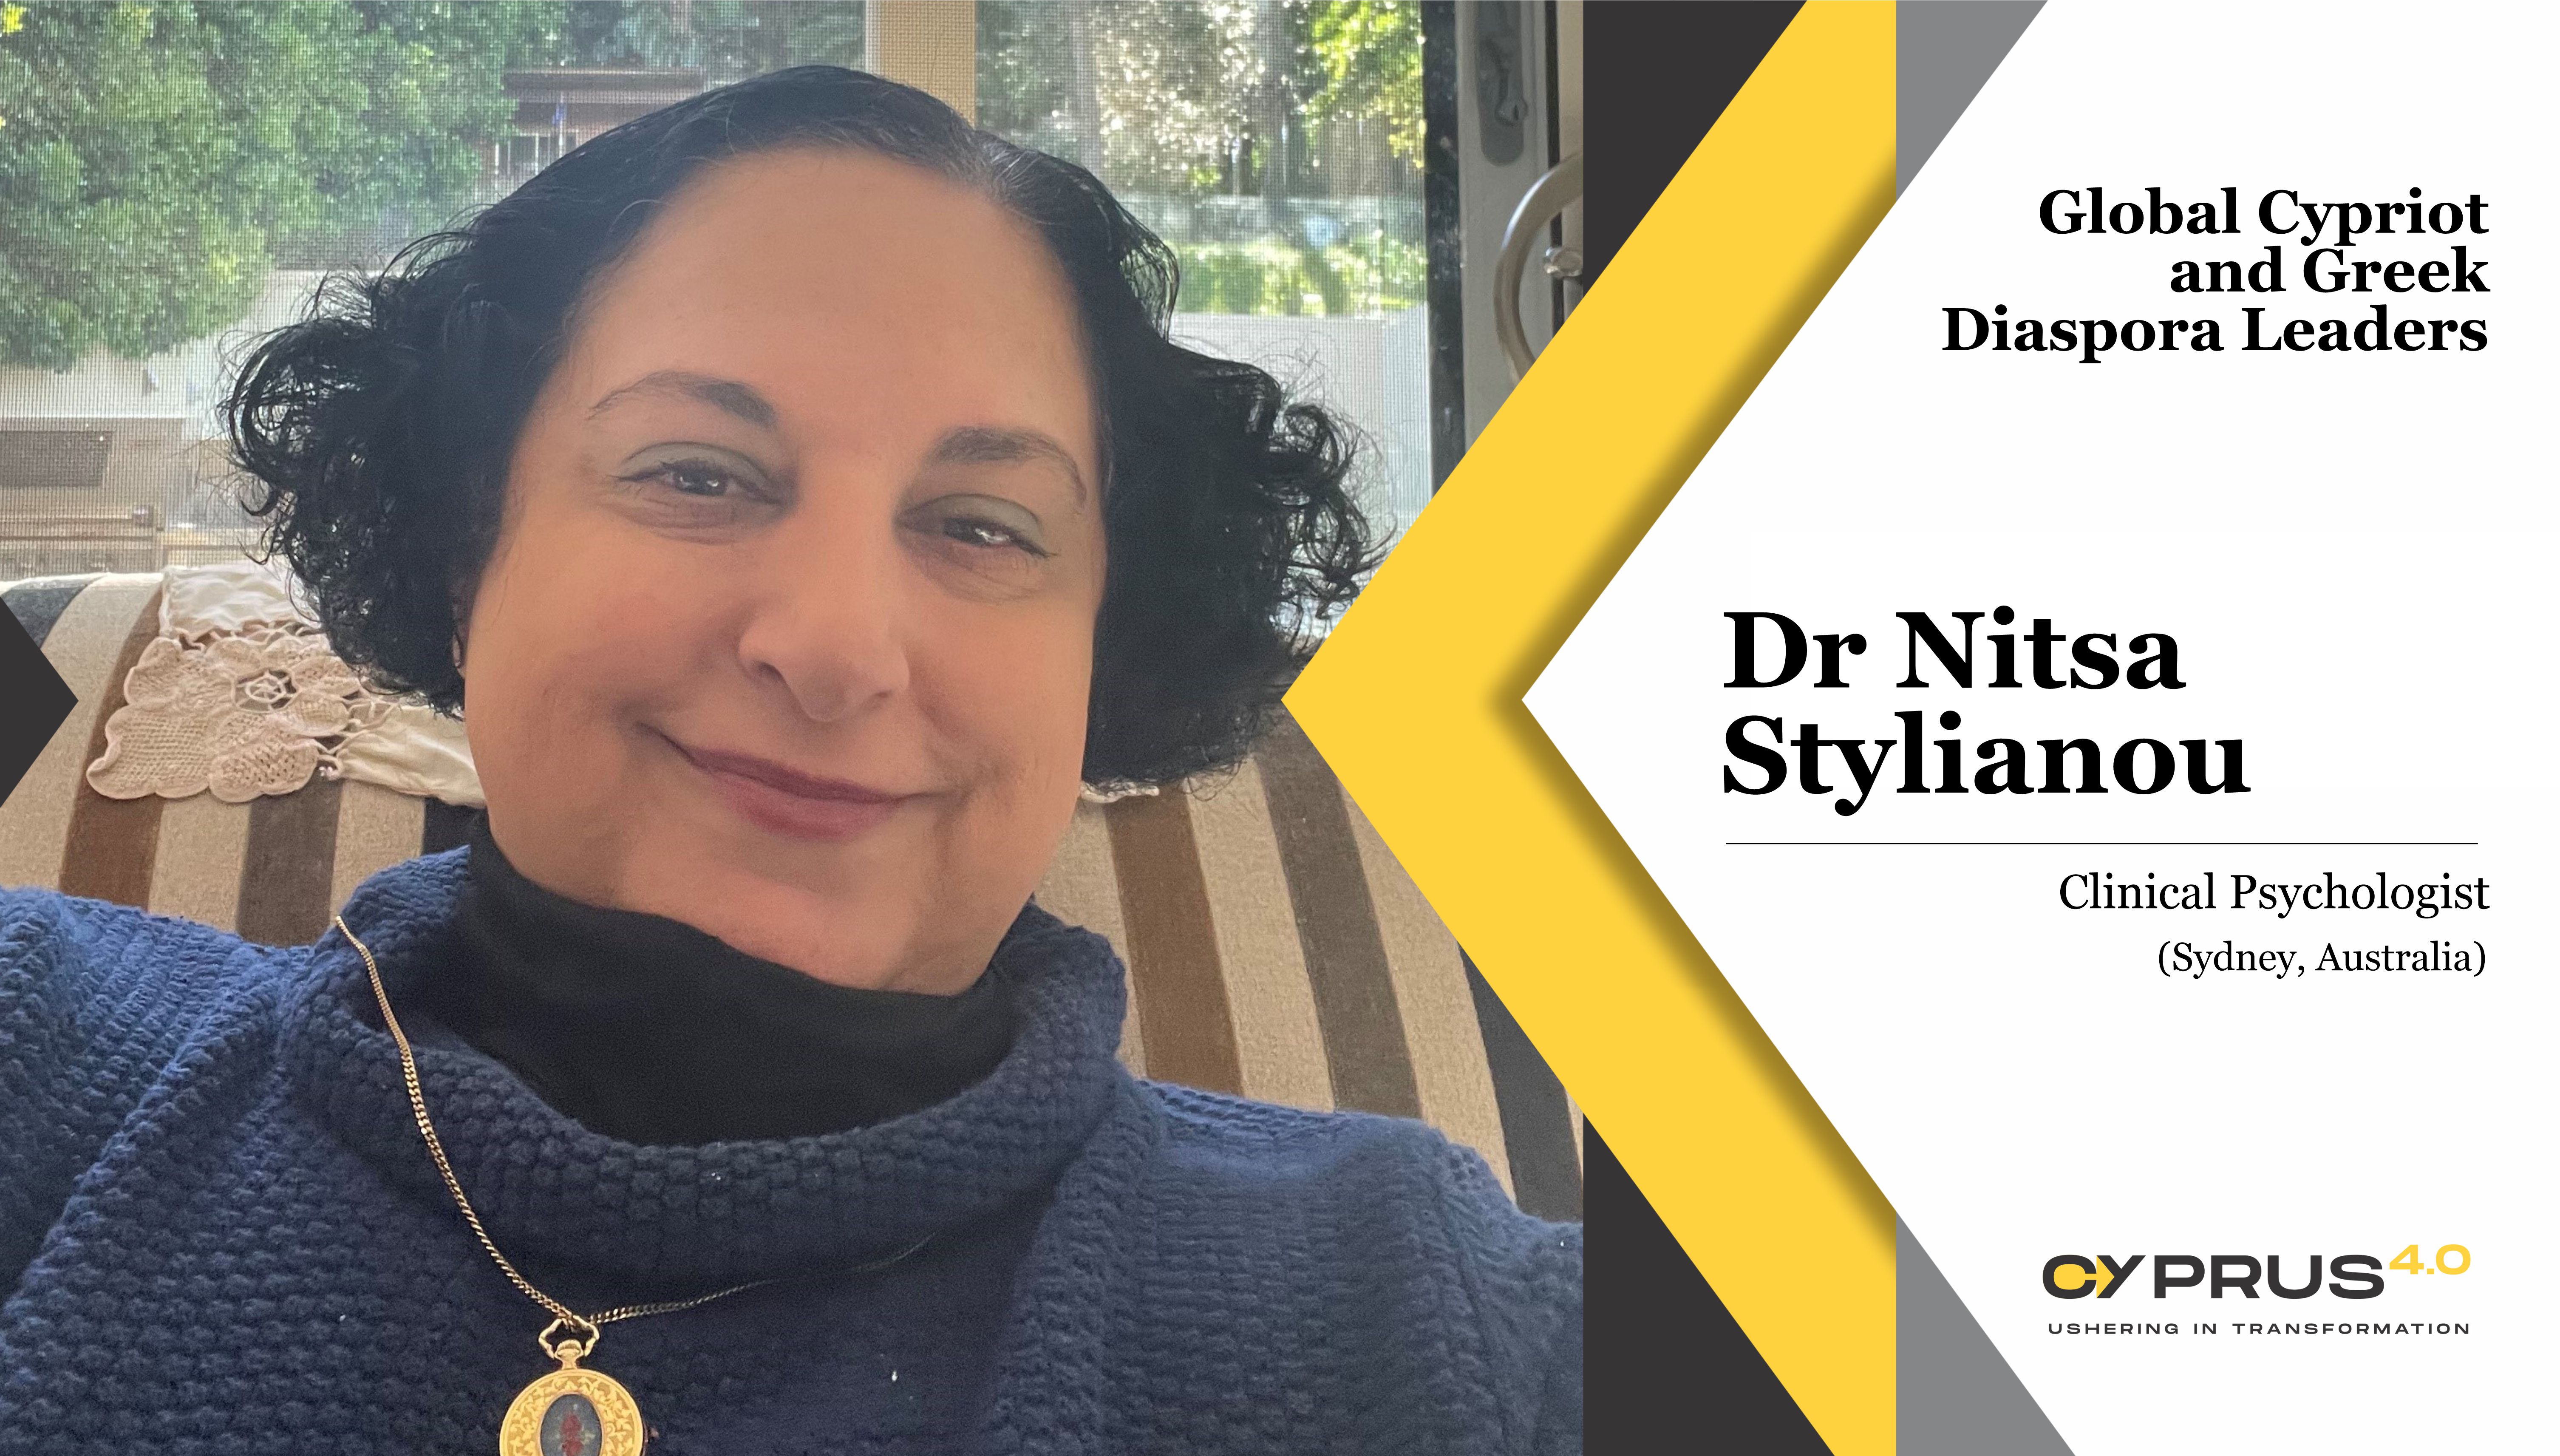 image Dr Nitsa Stylianou: Clinical Psychologist (Sydney, Australia)